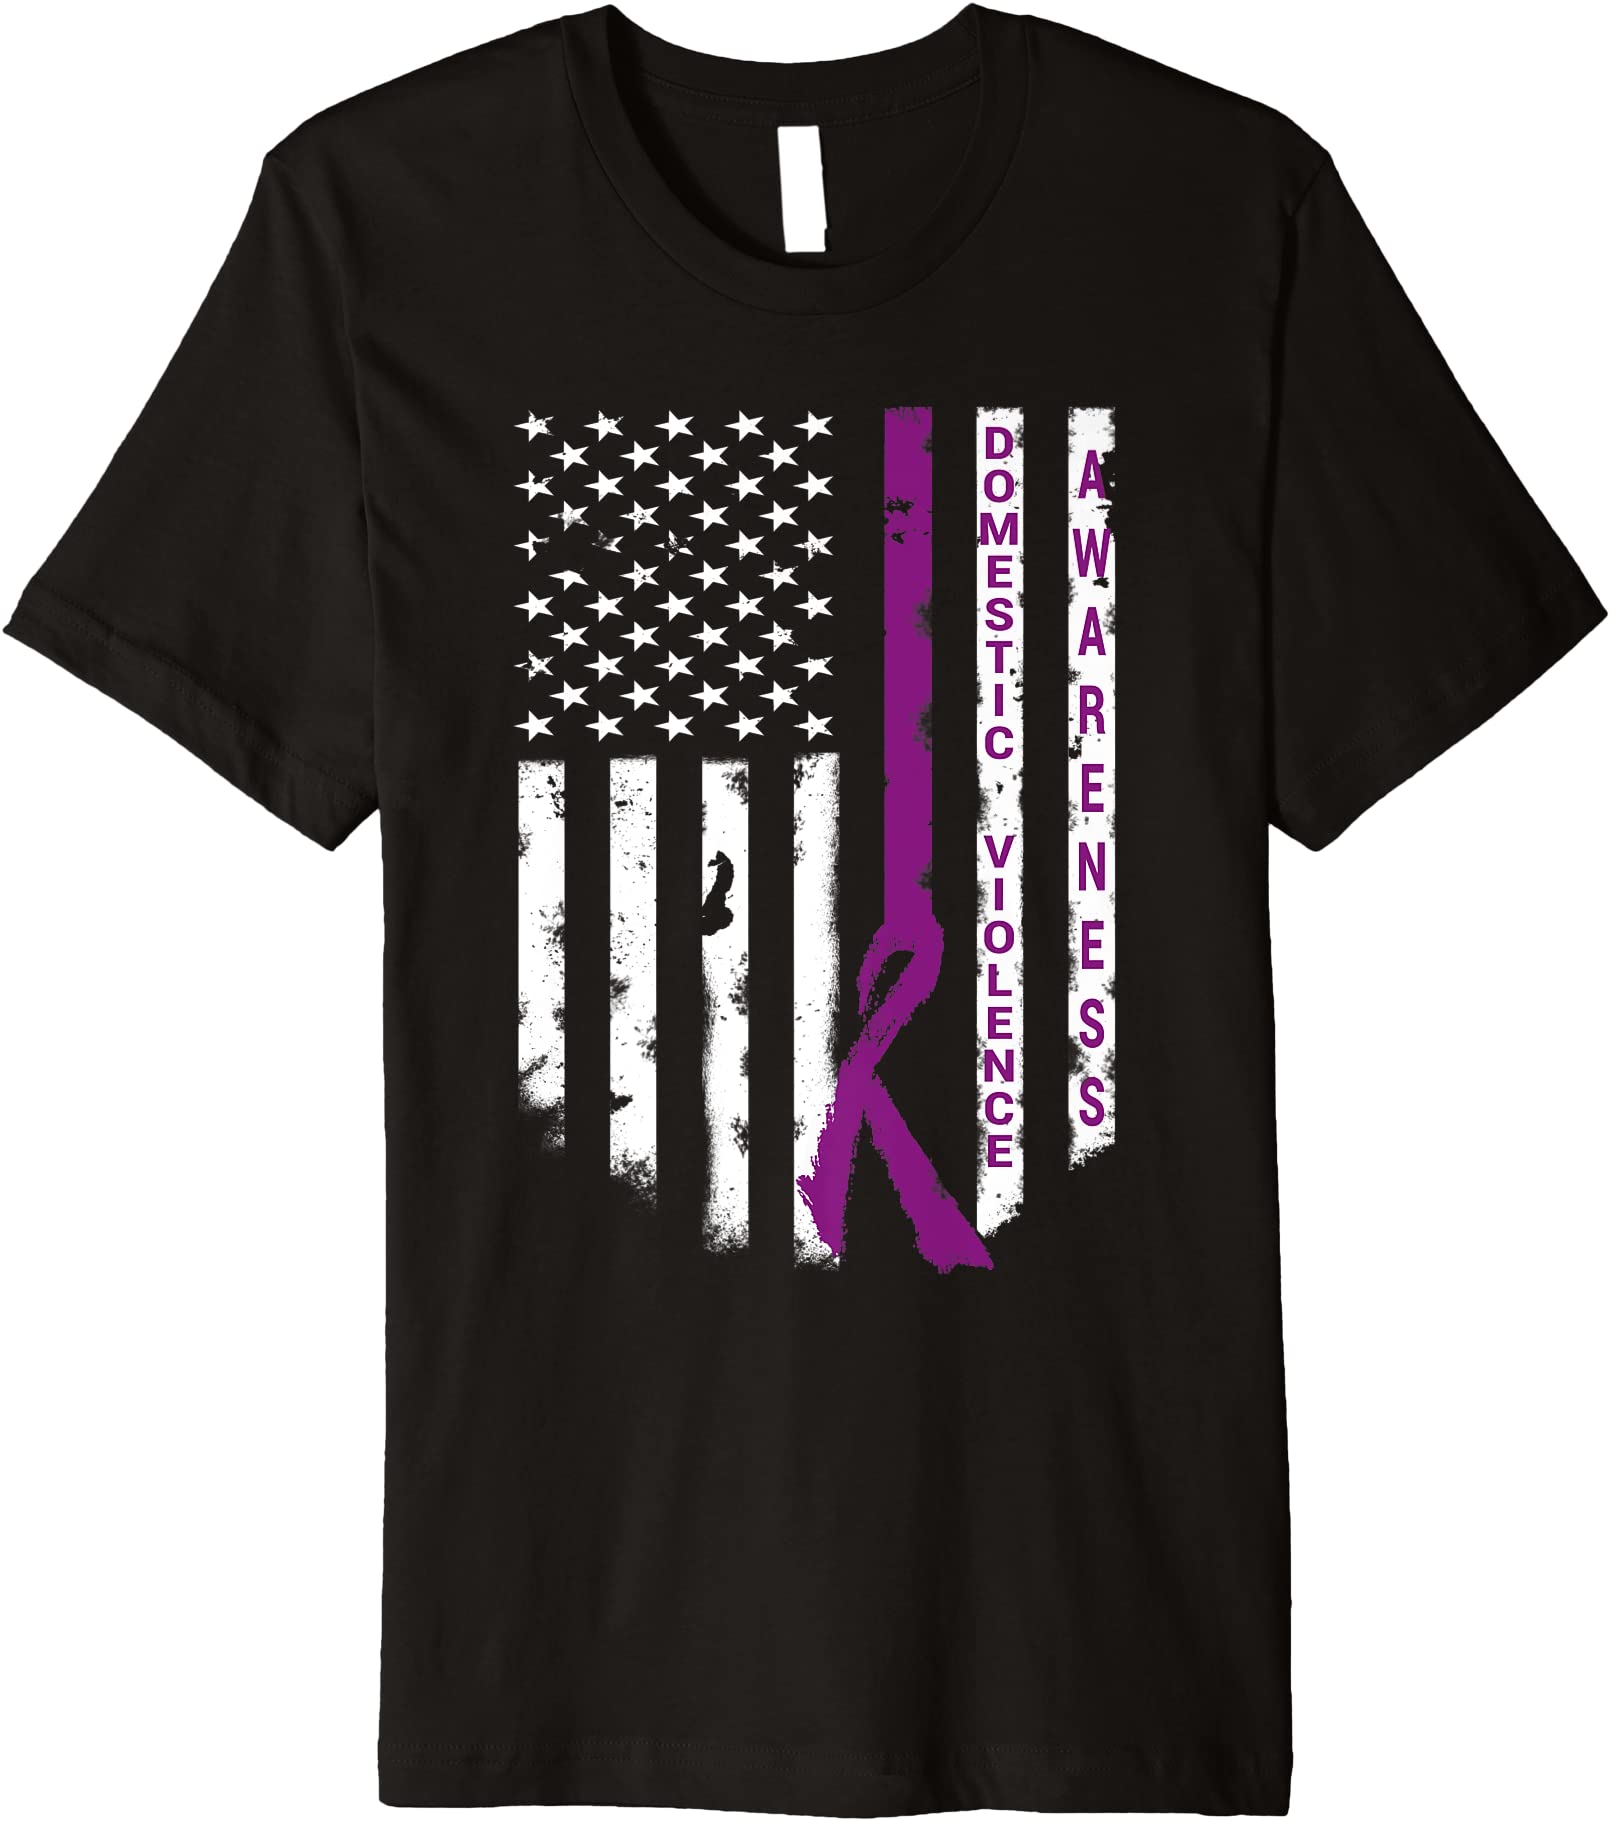 domestic violence prevention awareness t shirt purple ribbon men - Buy ...